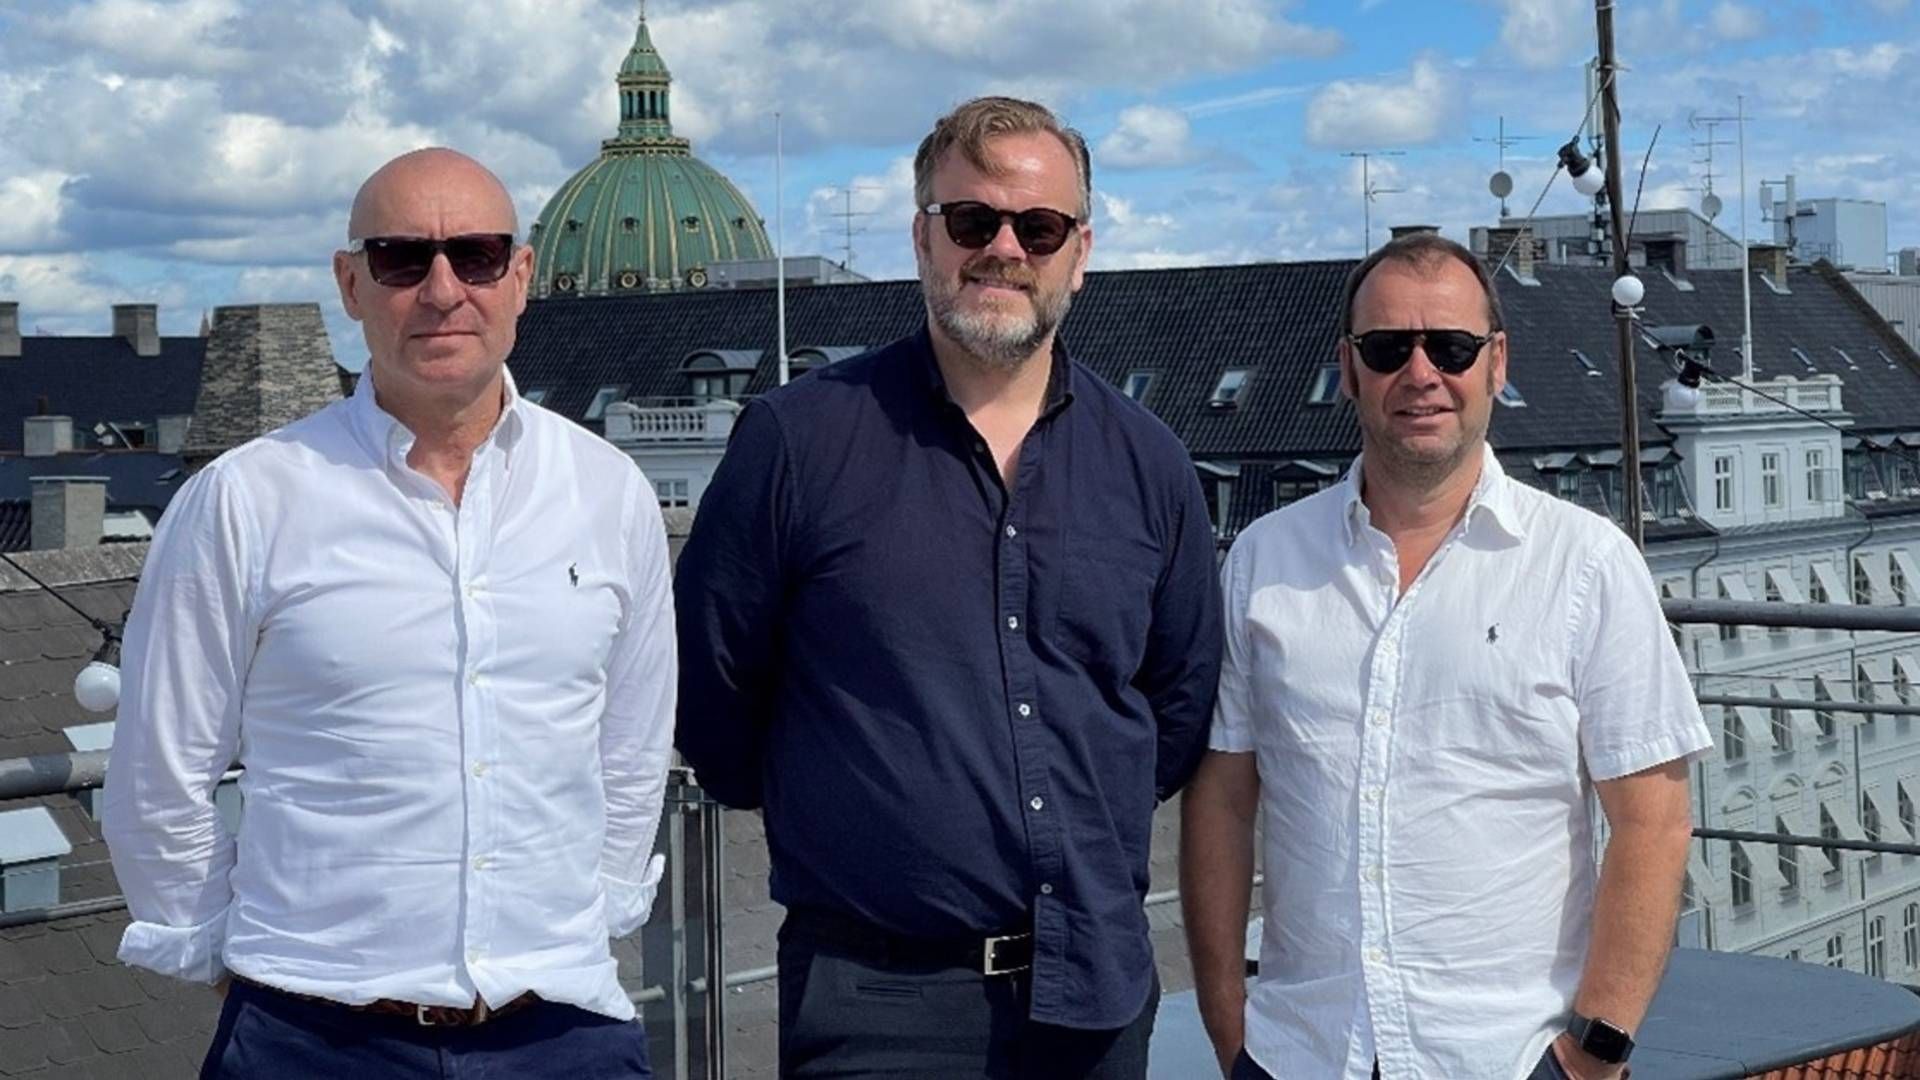 Fra venstre: Direktørerne i Scanbox, Kim William Beich og Thor Sigurjonsson, og direktør i Supersonic, Lars Mitch Fischermann | Foto: Pressfoto / Scanbox Entertainment